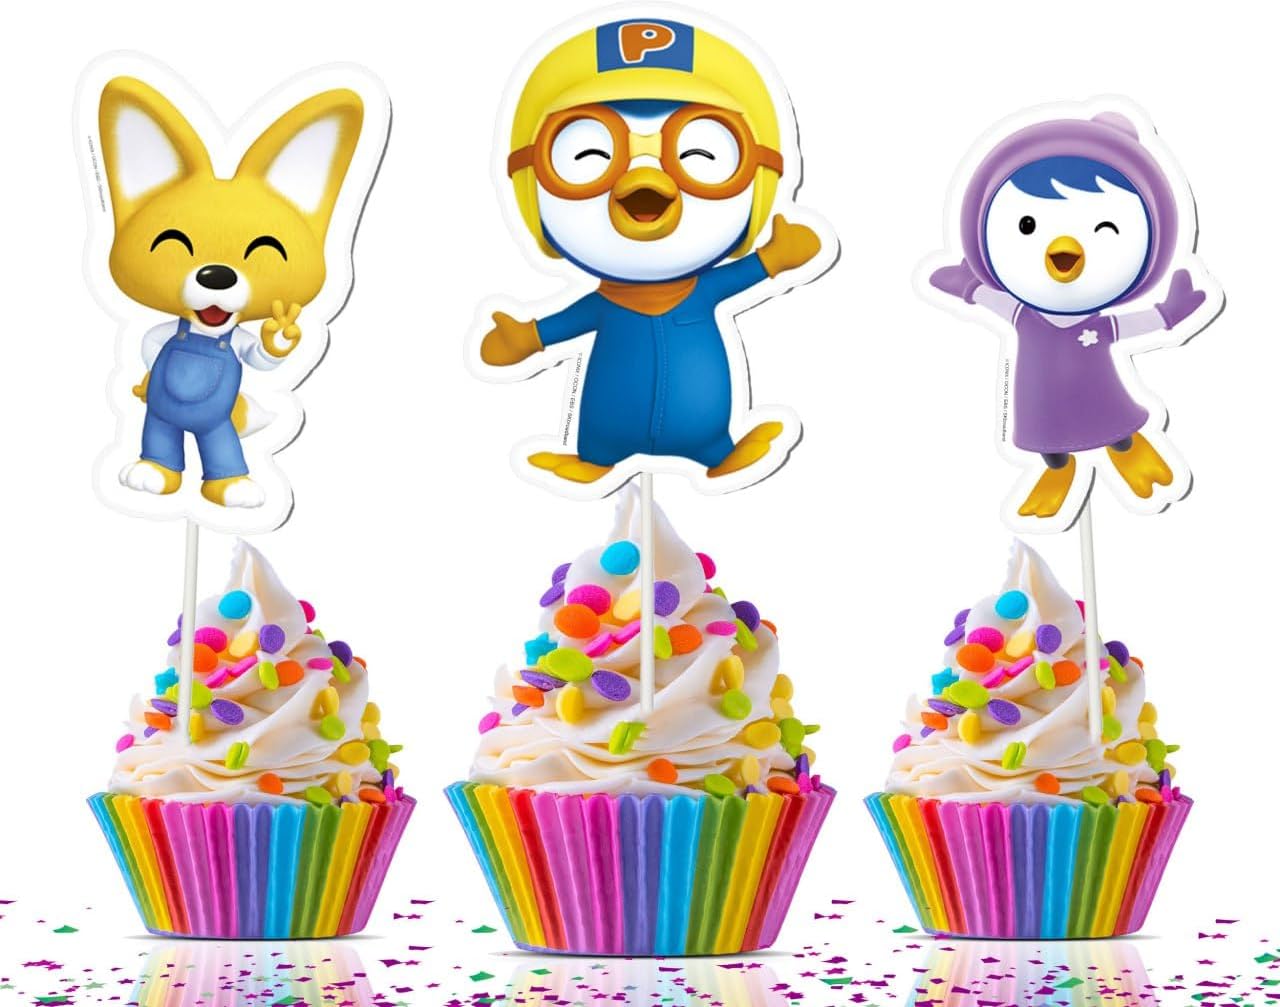 "Pororo's Party Picks" - Pororo the Little Penguin Cupcake Toppers - Set of 10